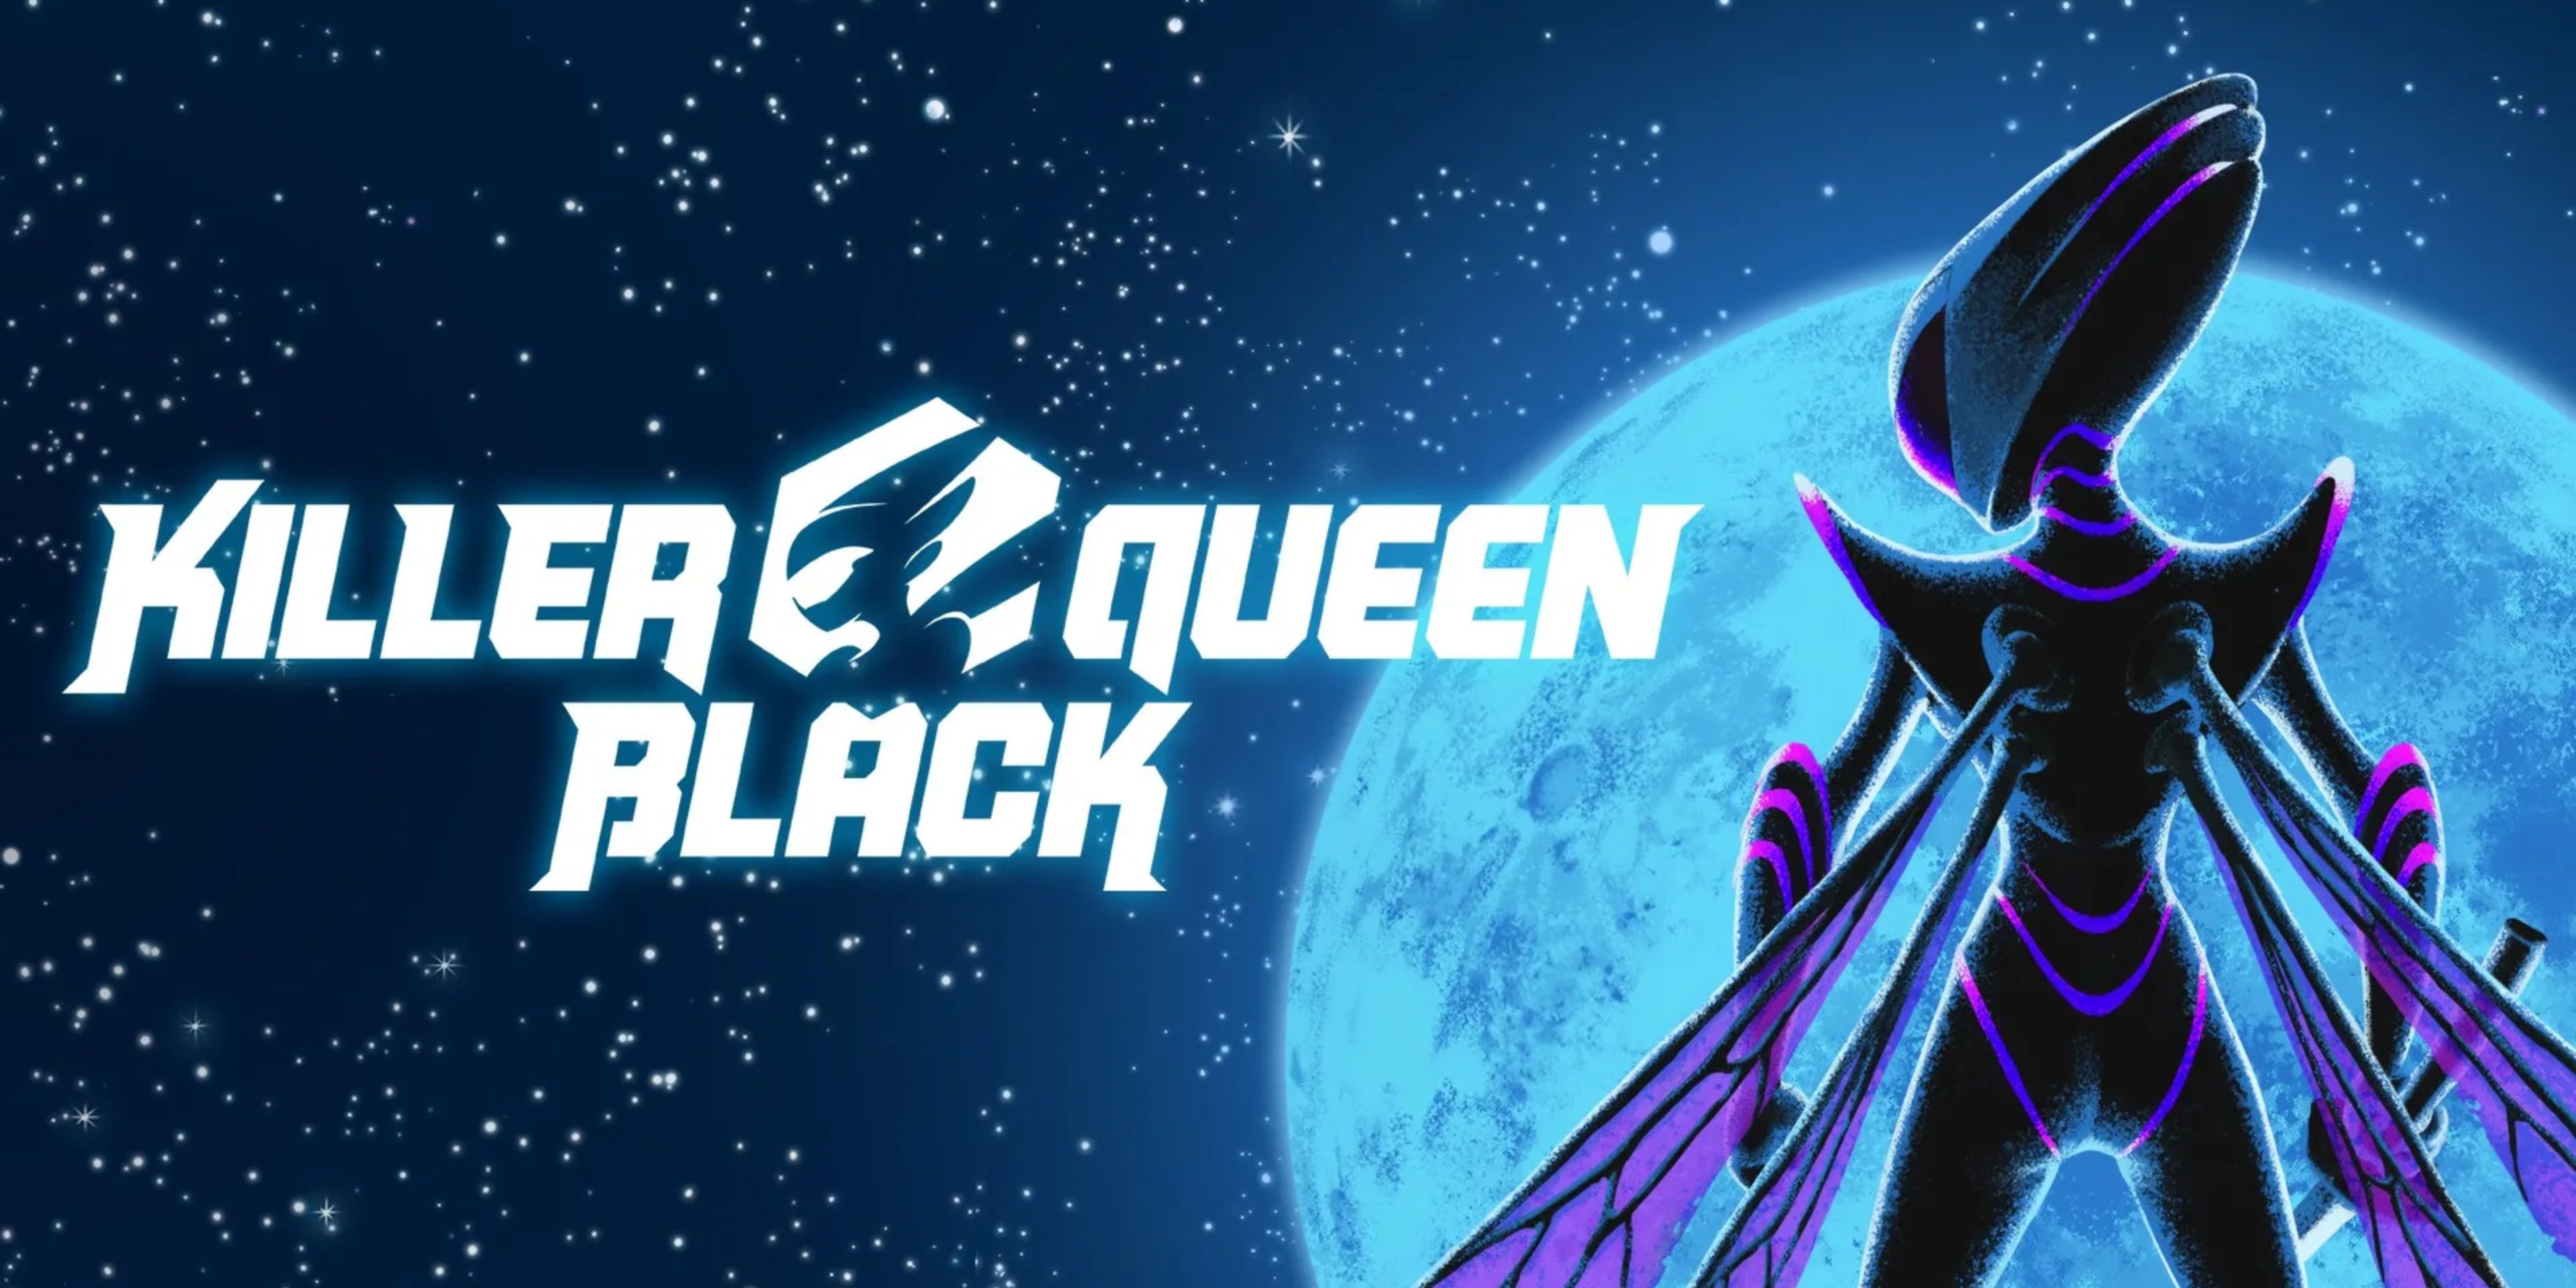 Title screen for Killer Queen Black